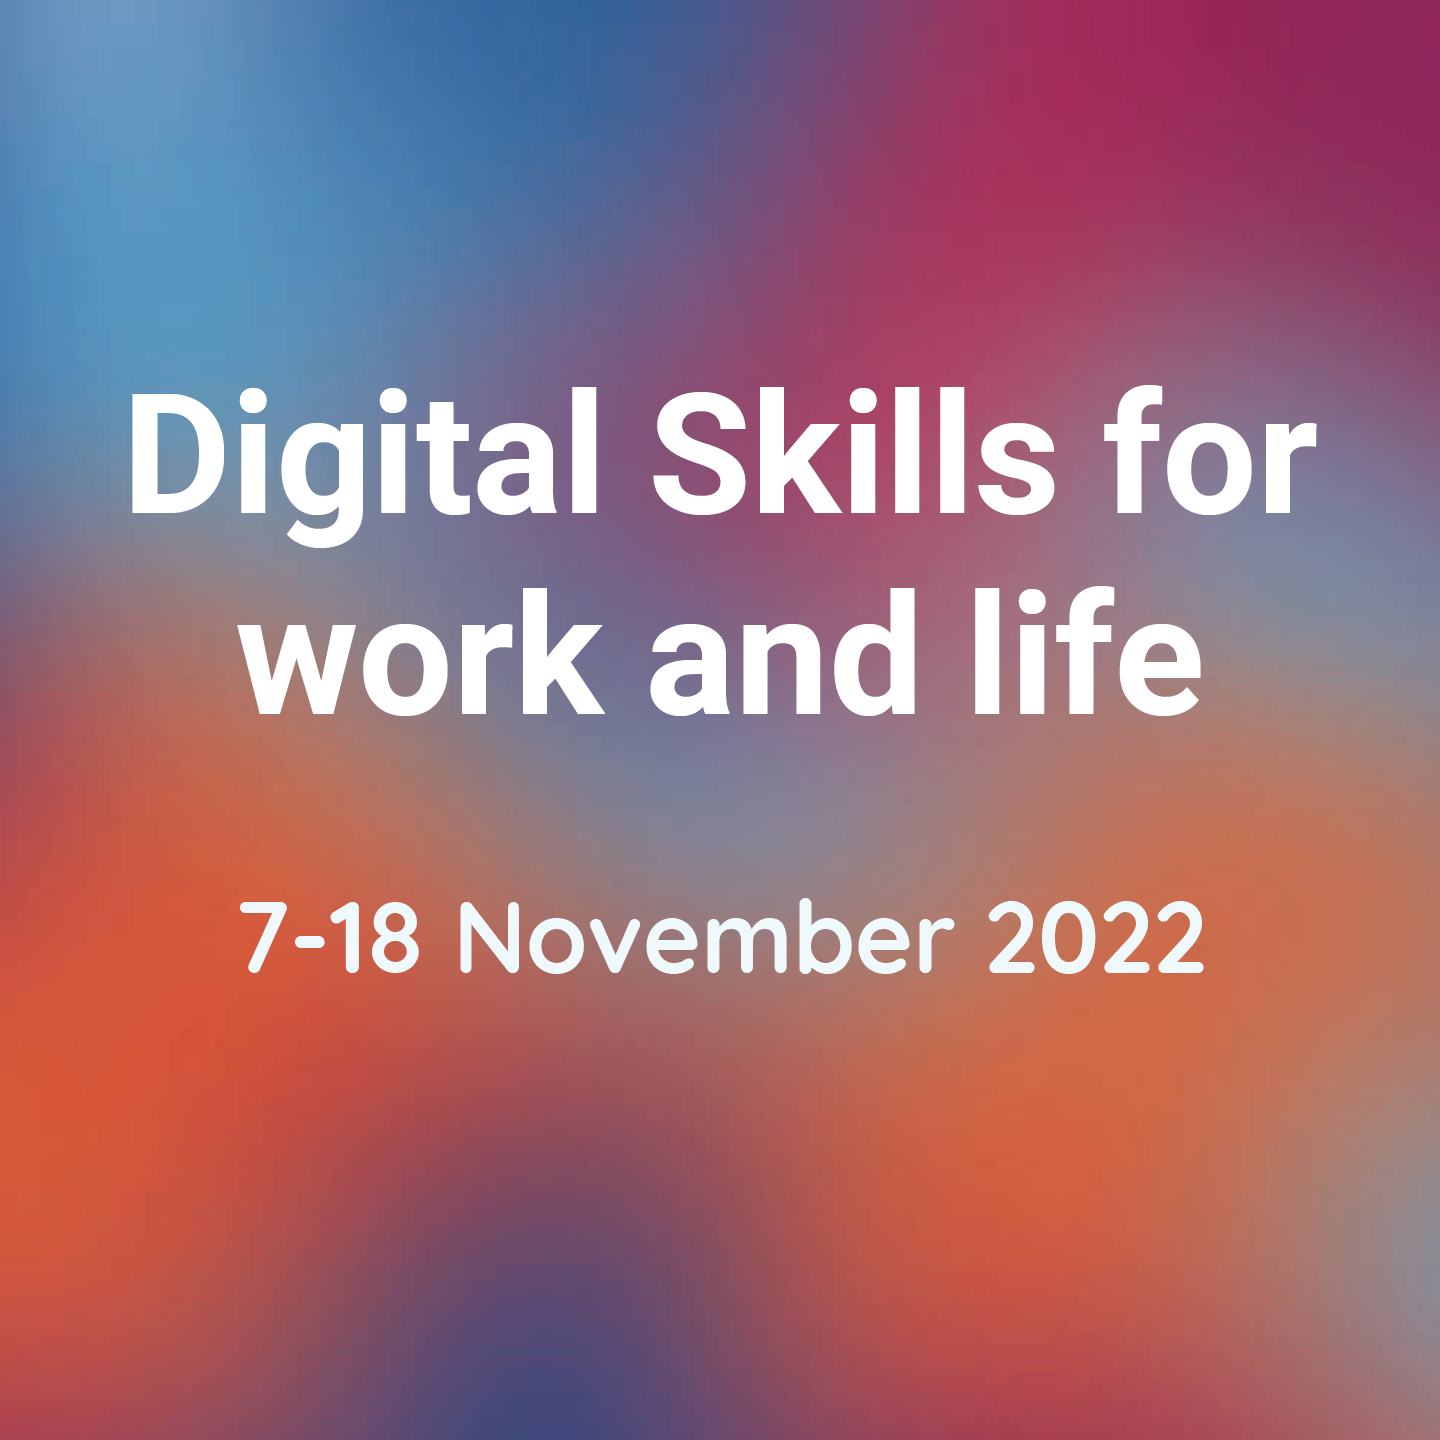 Digital skills for life and work 